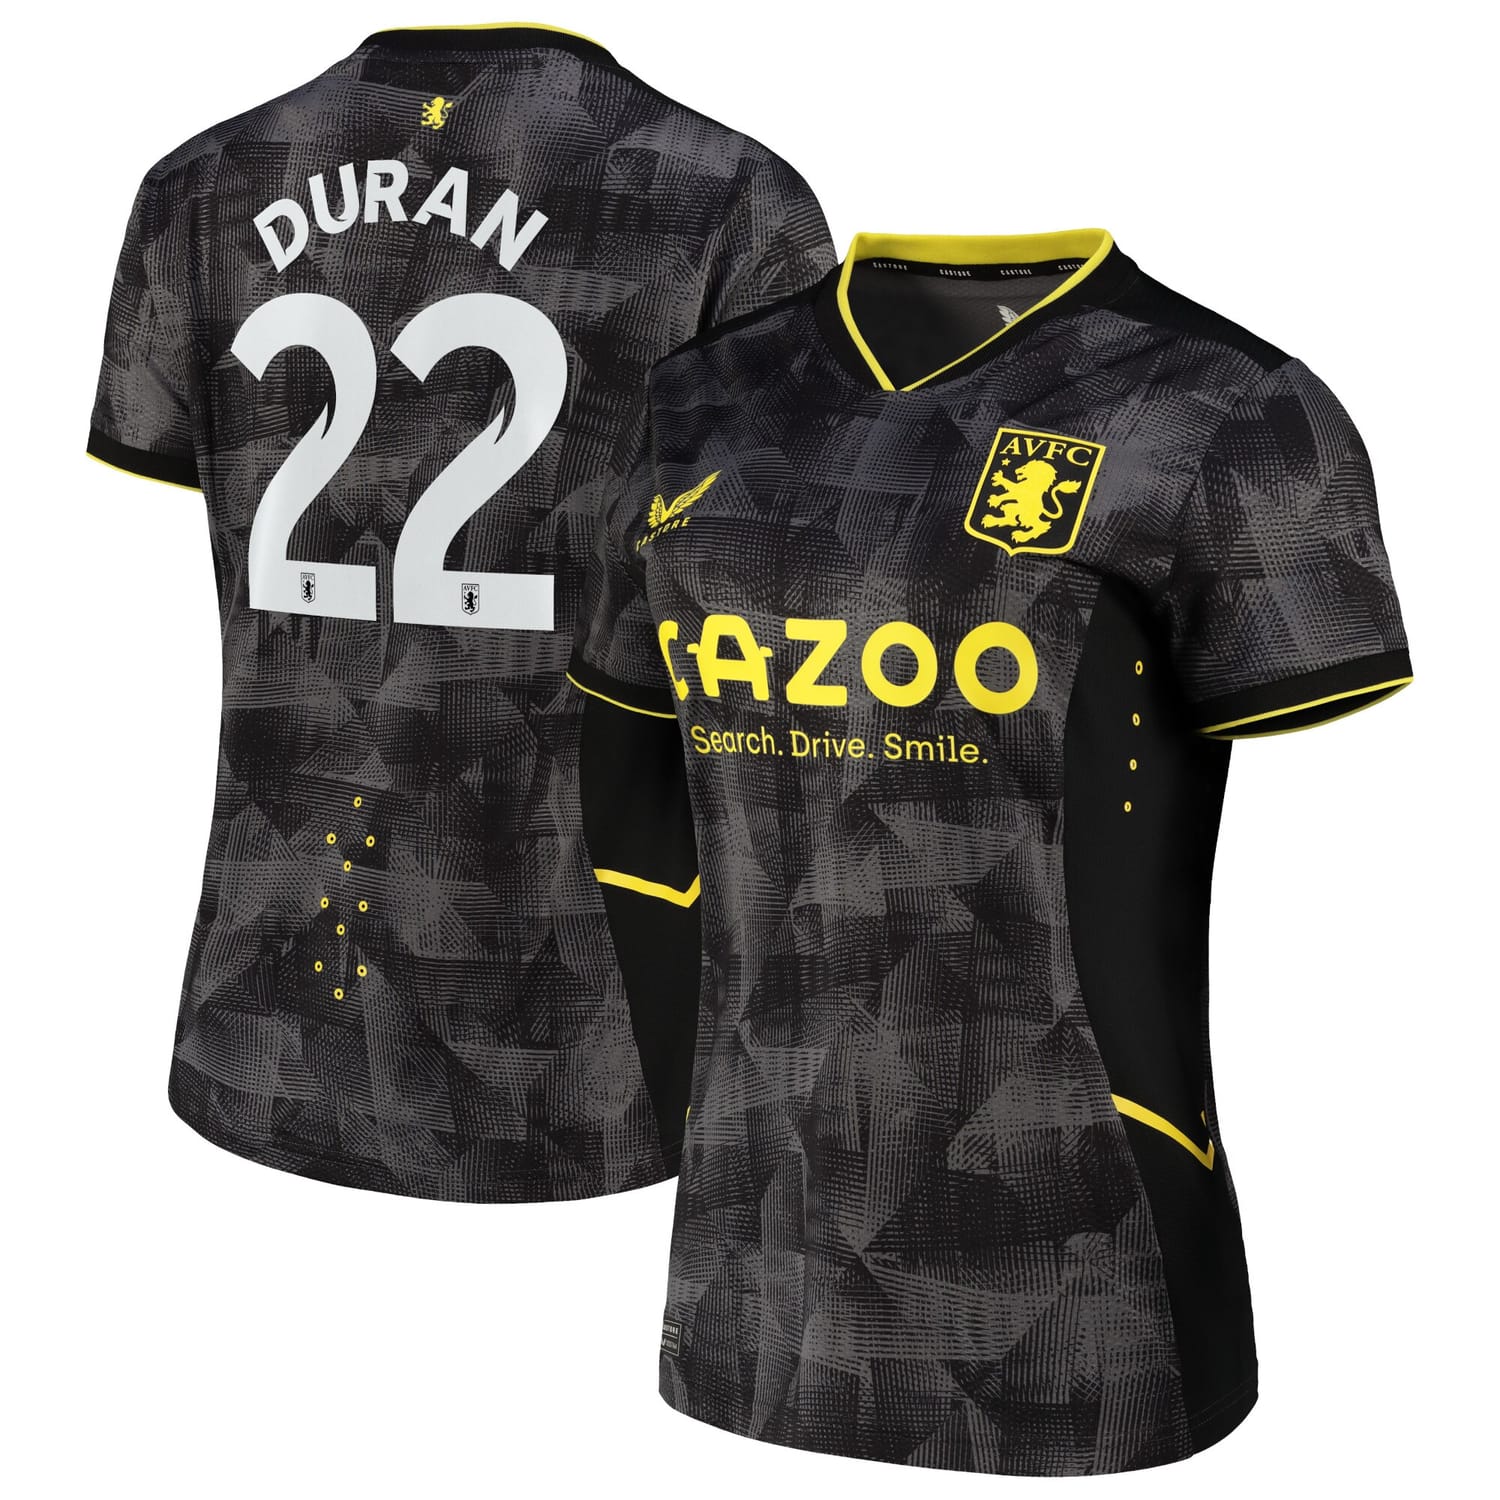 Premier League Aston Villa Third Cup Pro Jersey Shirt 2022-23 player Duran 22 printing for Women